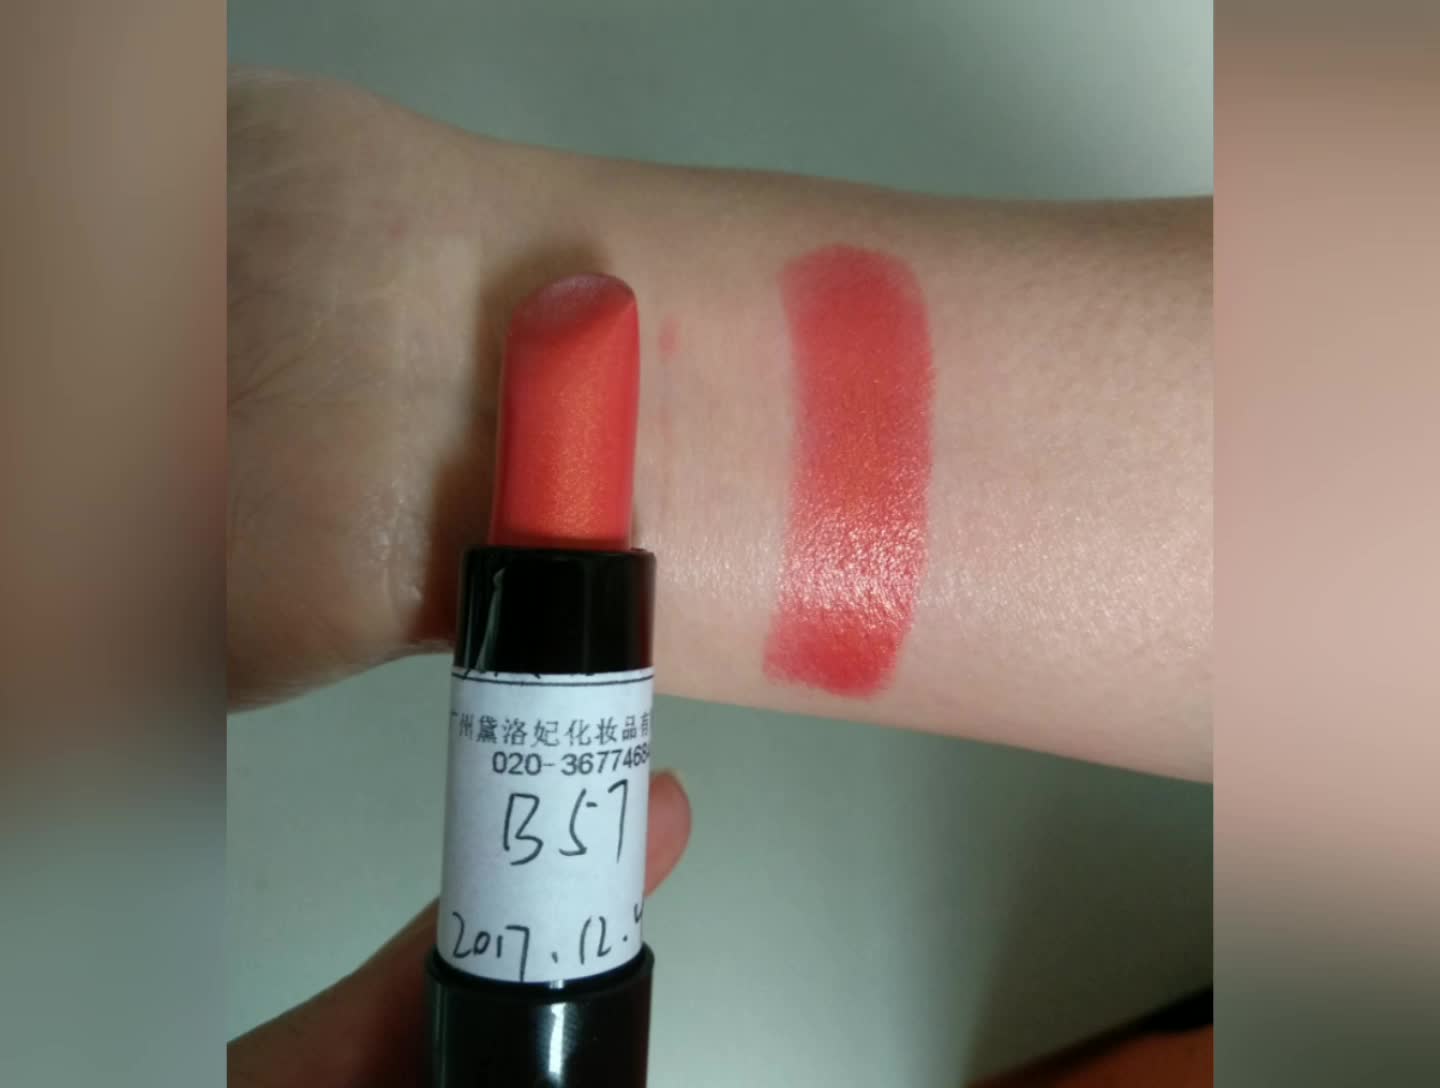 Banffee waterproof velvet matte lipstick private label with no logo